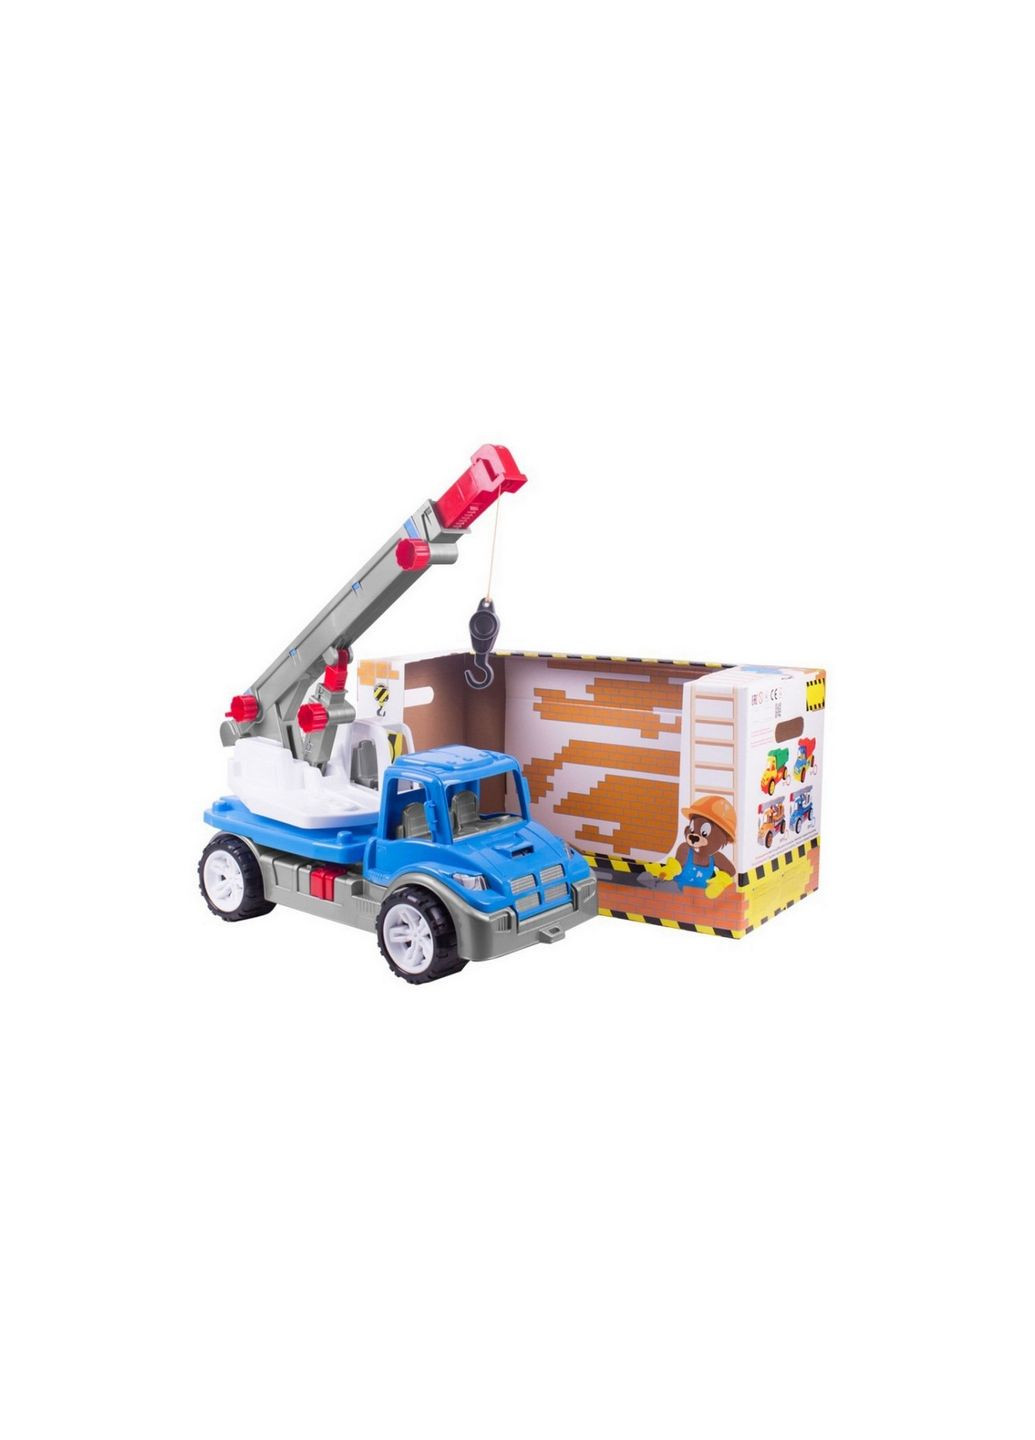 Детская игрушка "Автокран" Технок 3893TXK в коробке ТехноК (282933326)